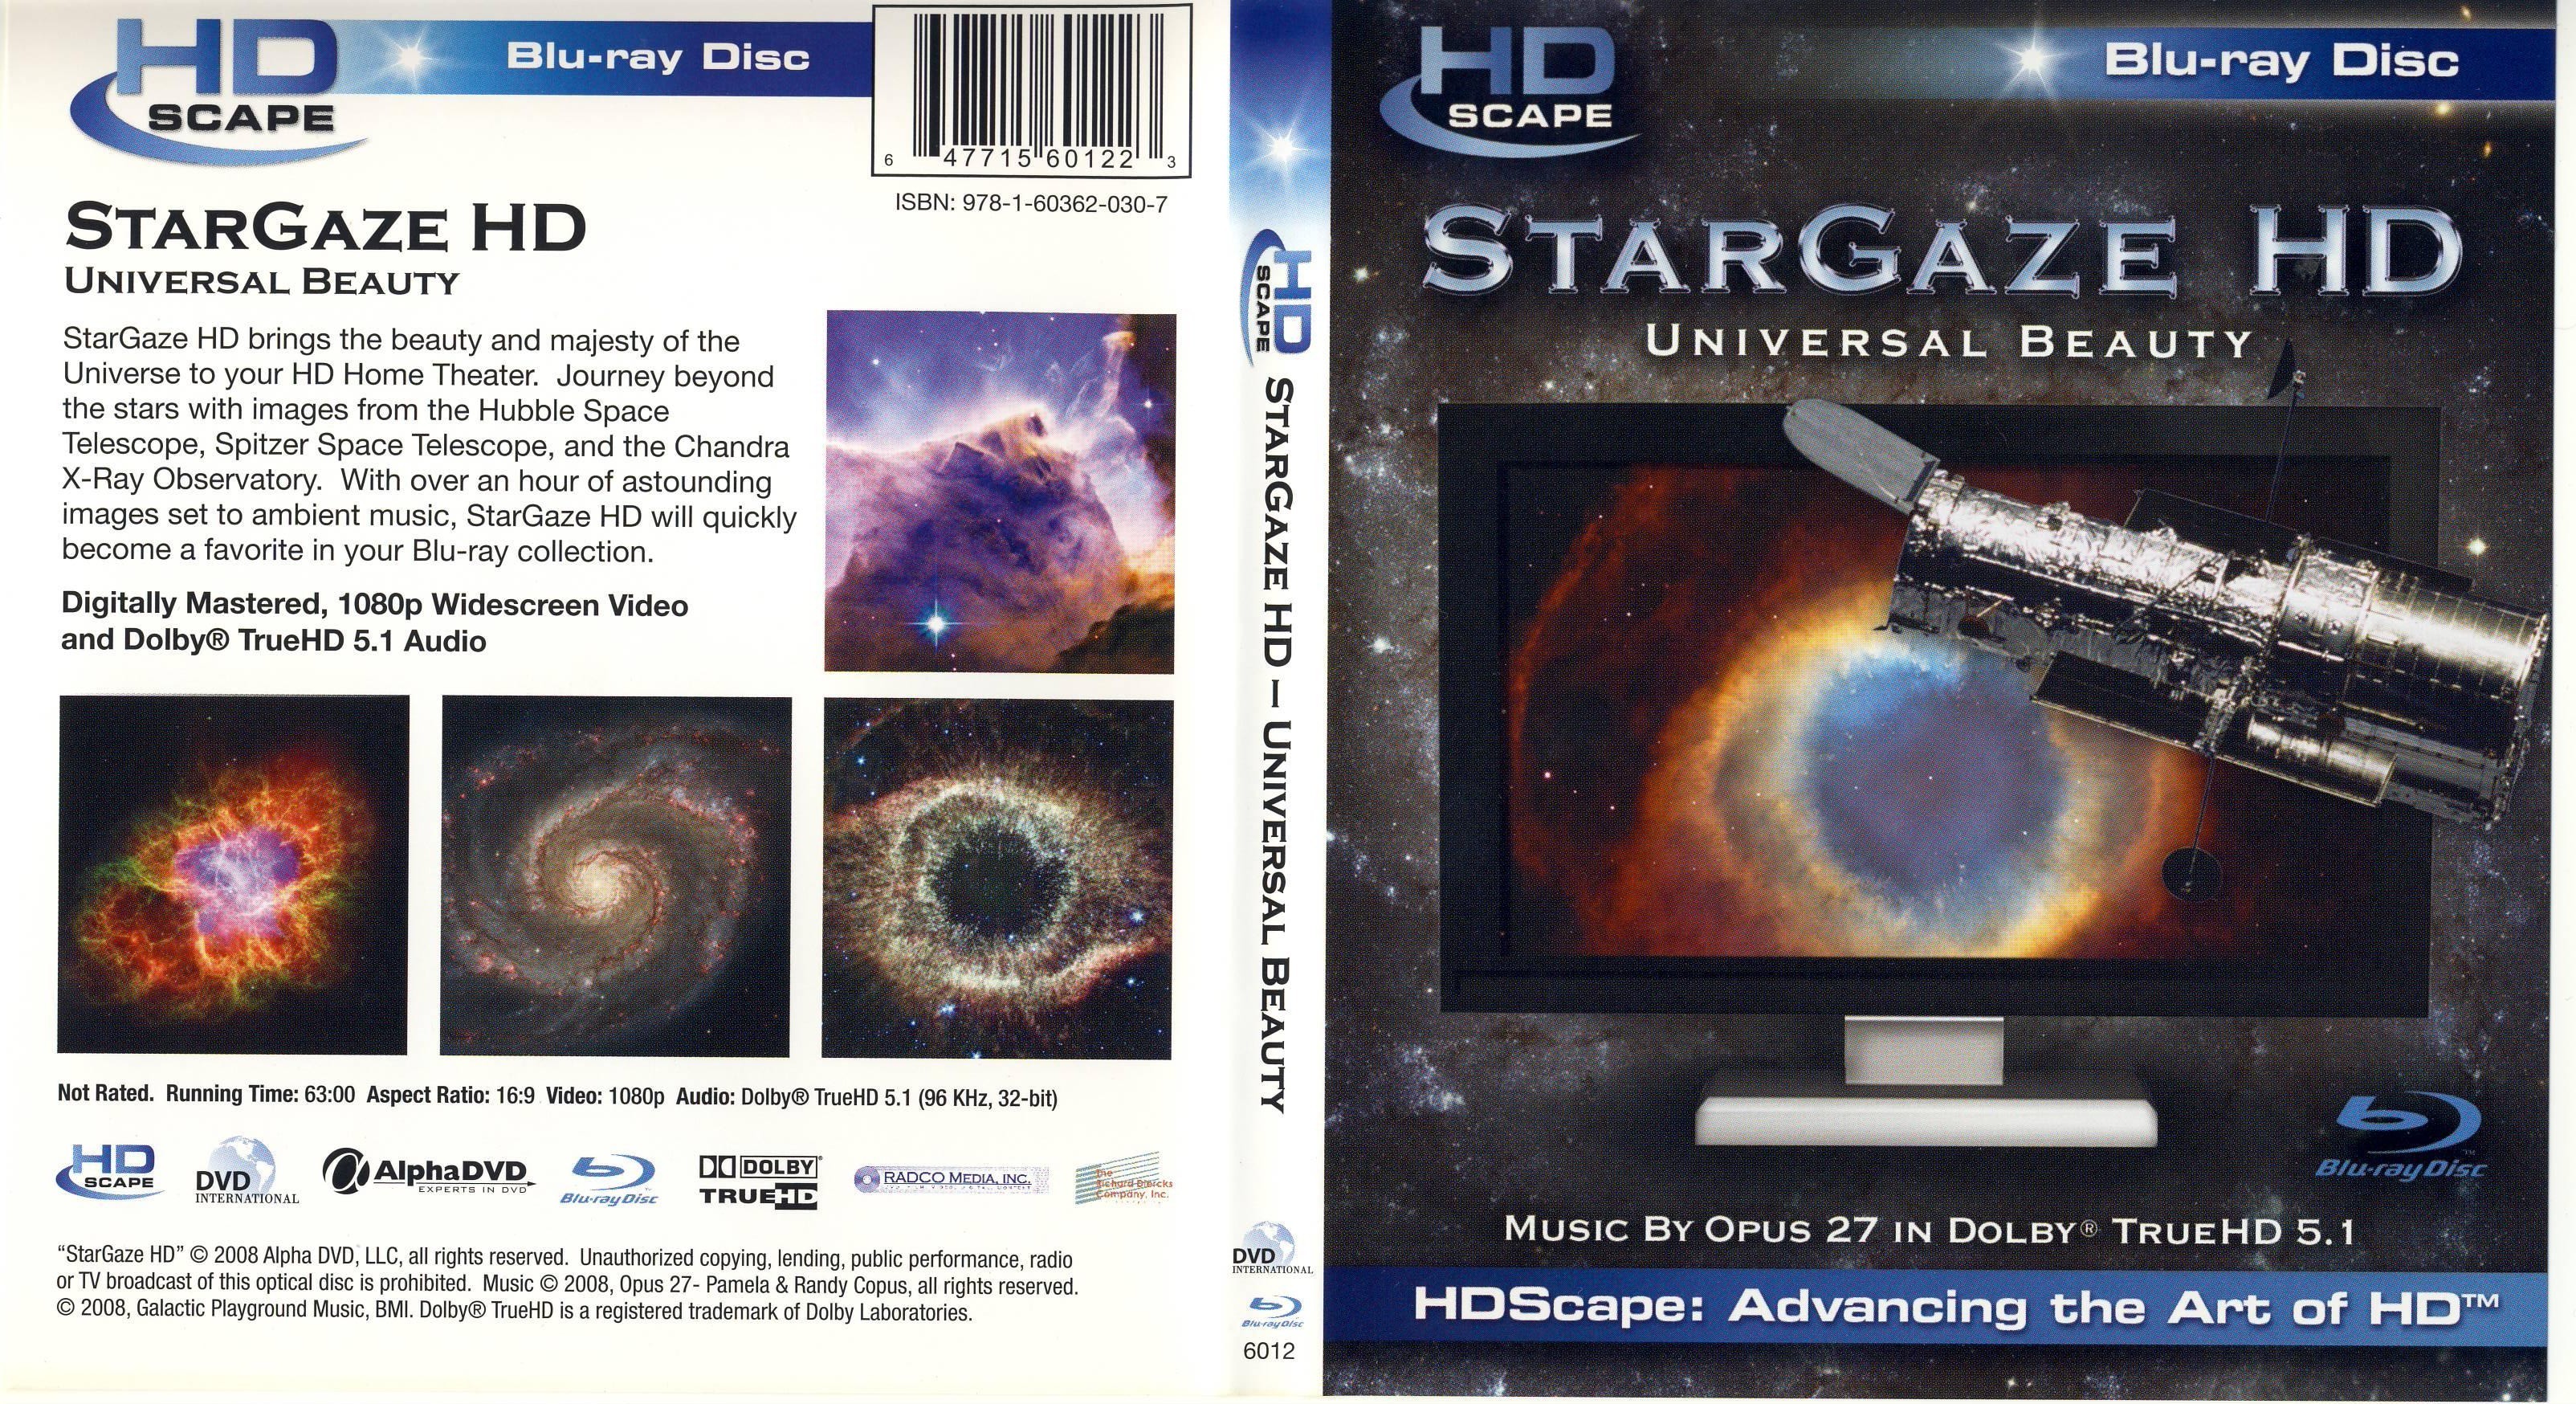 Jaquette DVD Stargaze Hd Universal Beauty Zone 1 (BLU-RAY)